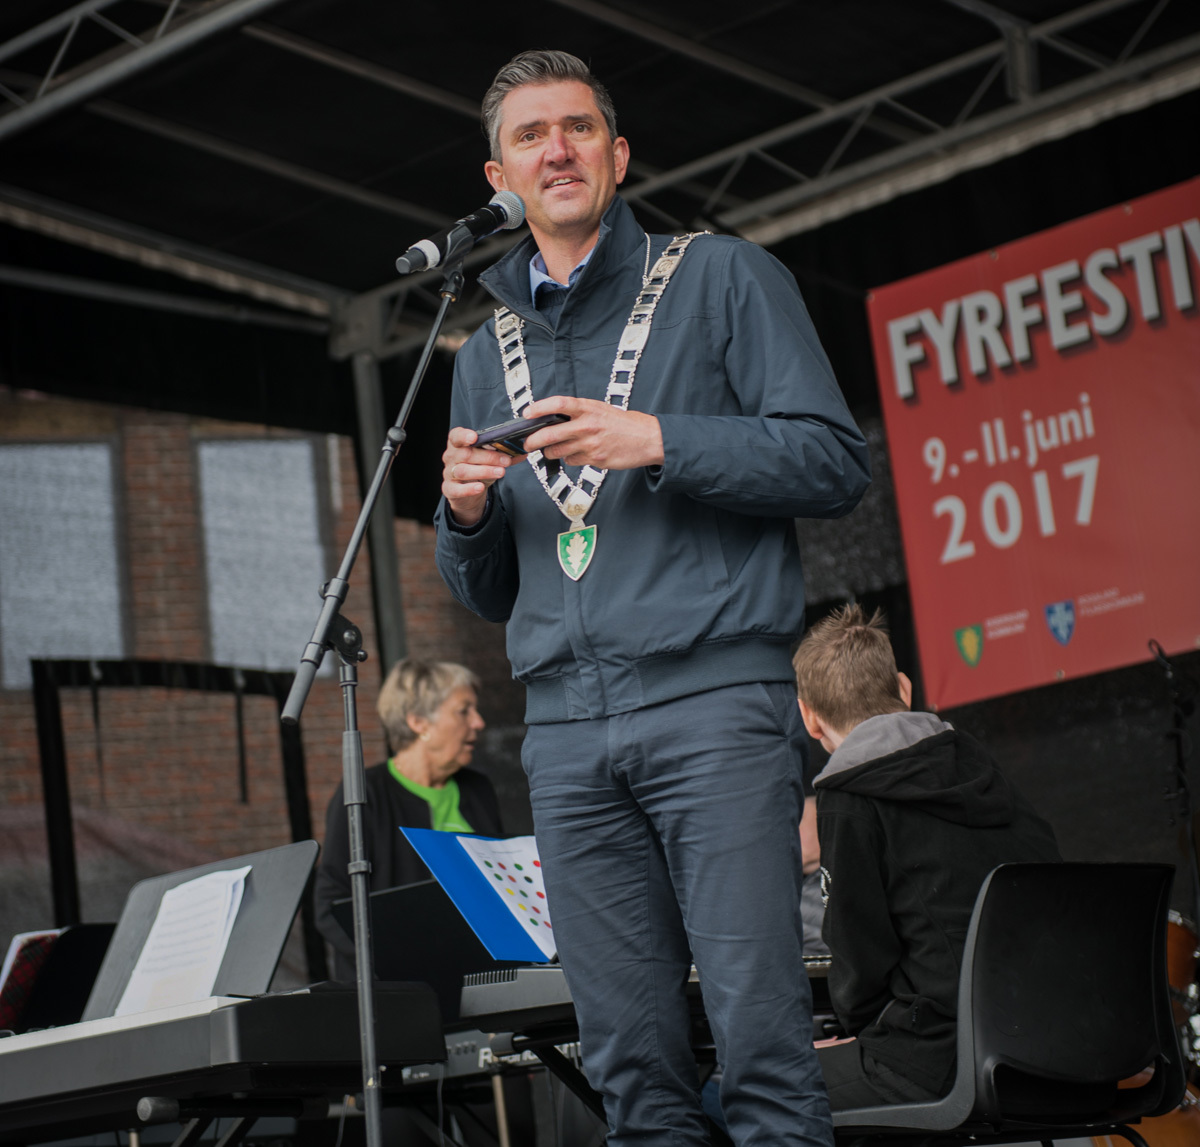 Fyrfestivalen-2017-24.jpg